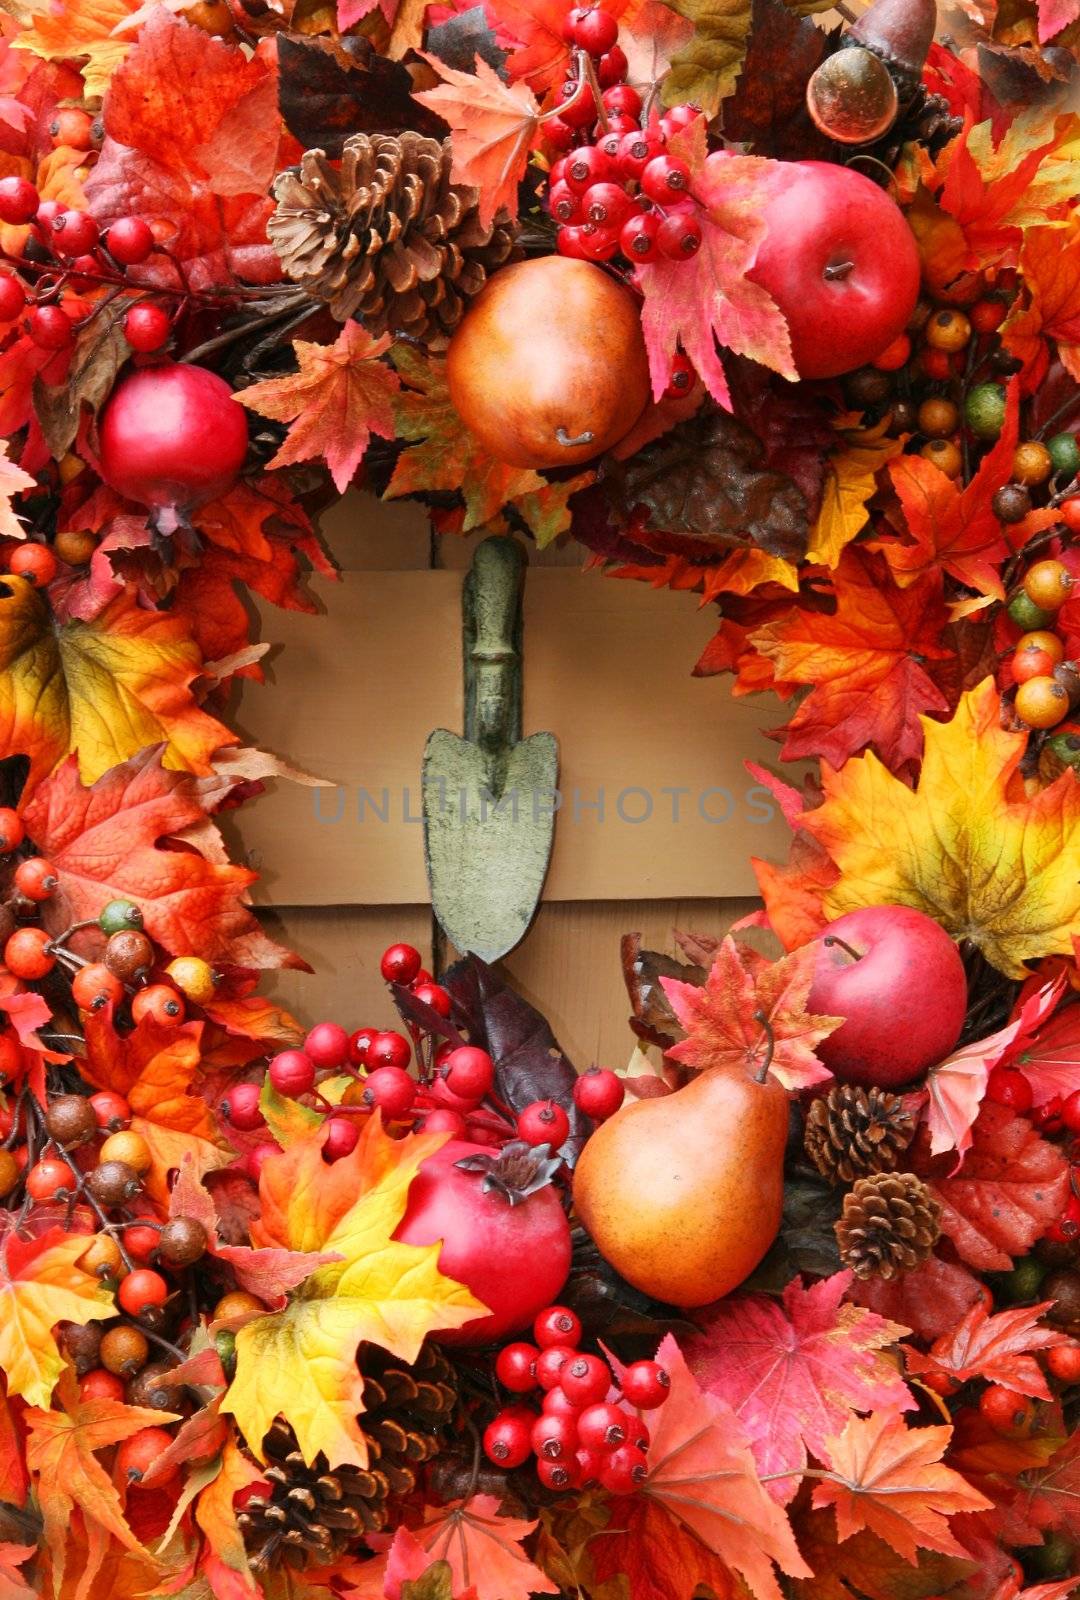 Festive autumn wreath on rustic door